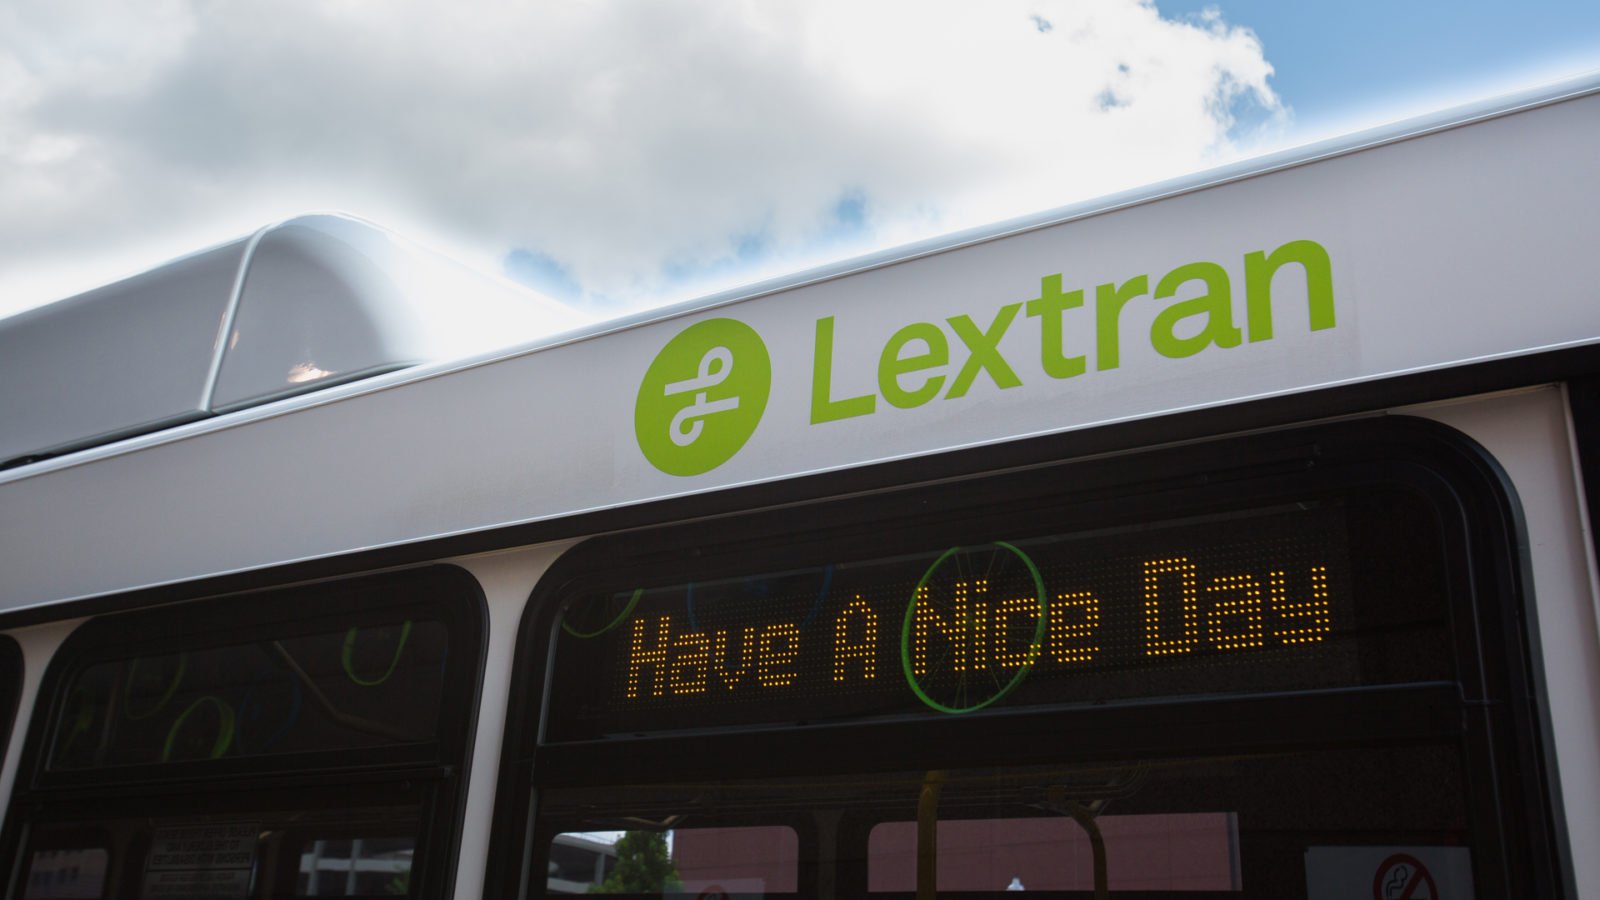 Lextran: Lexington Transportation visual identity bus wrap design branding